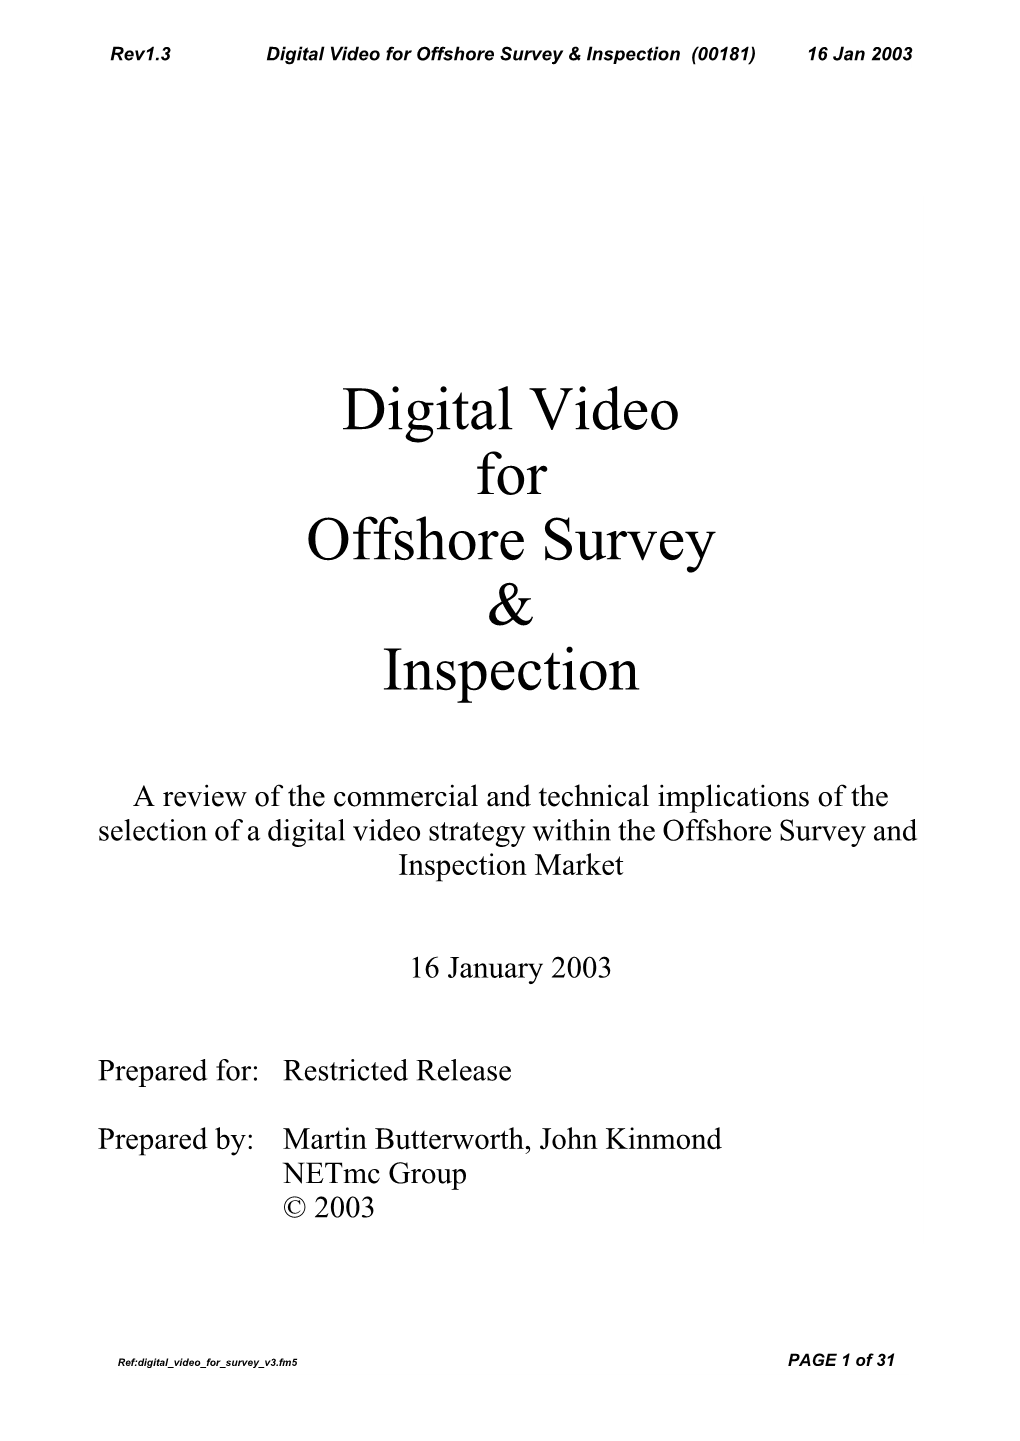 Digital Video for Offshore Survey & Inspection